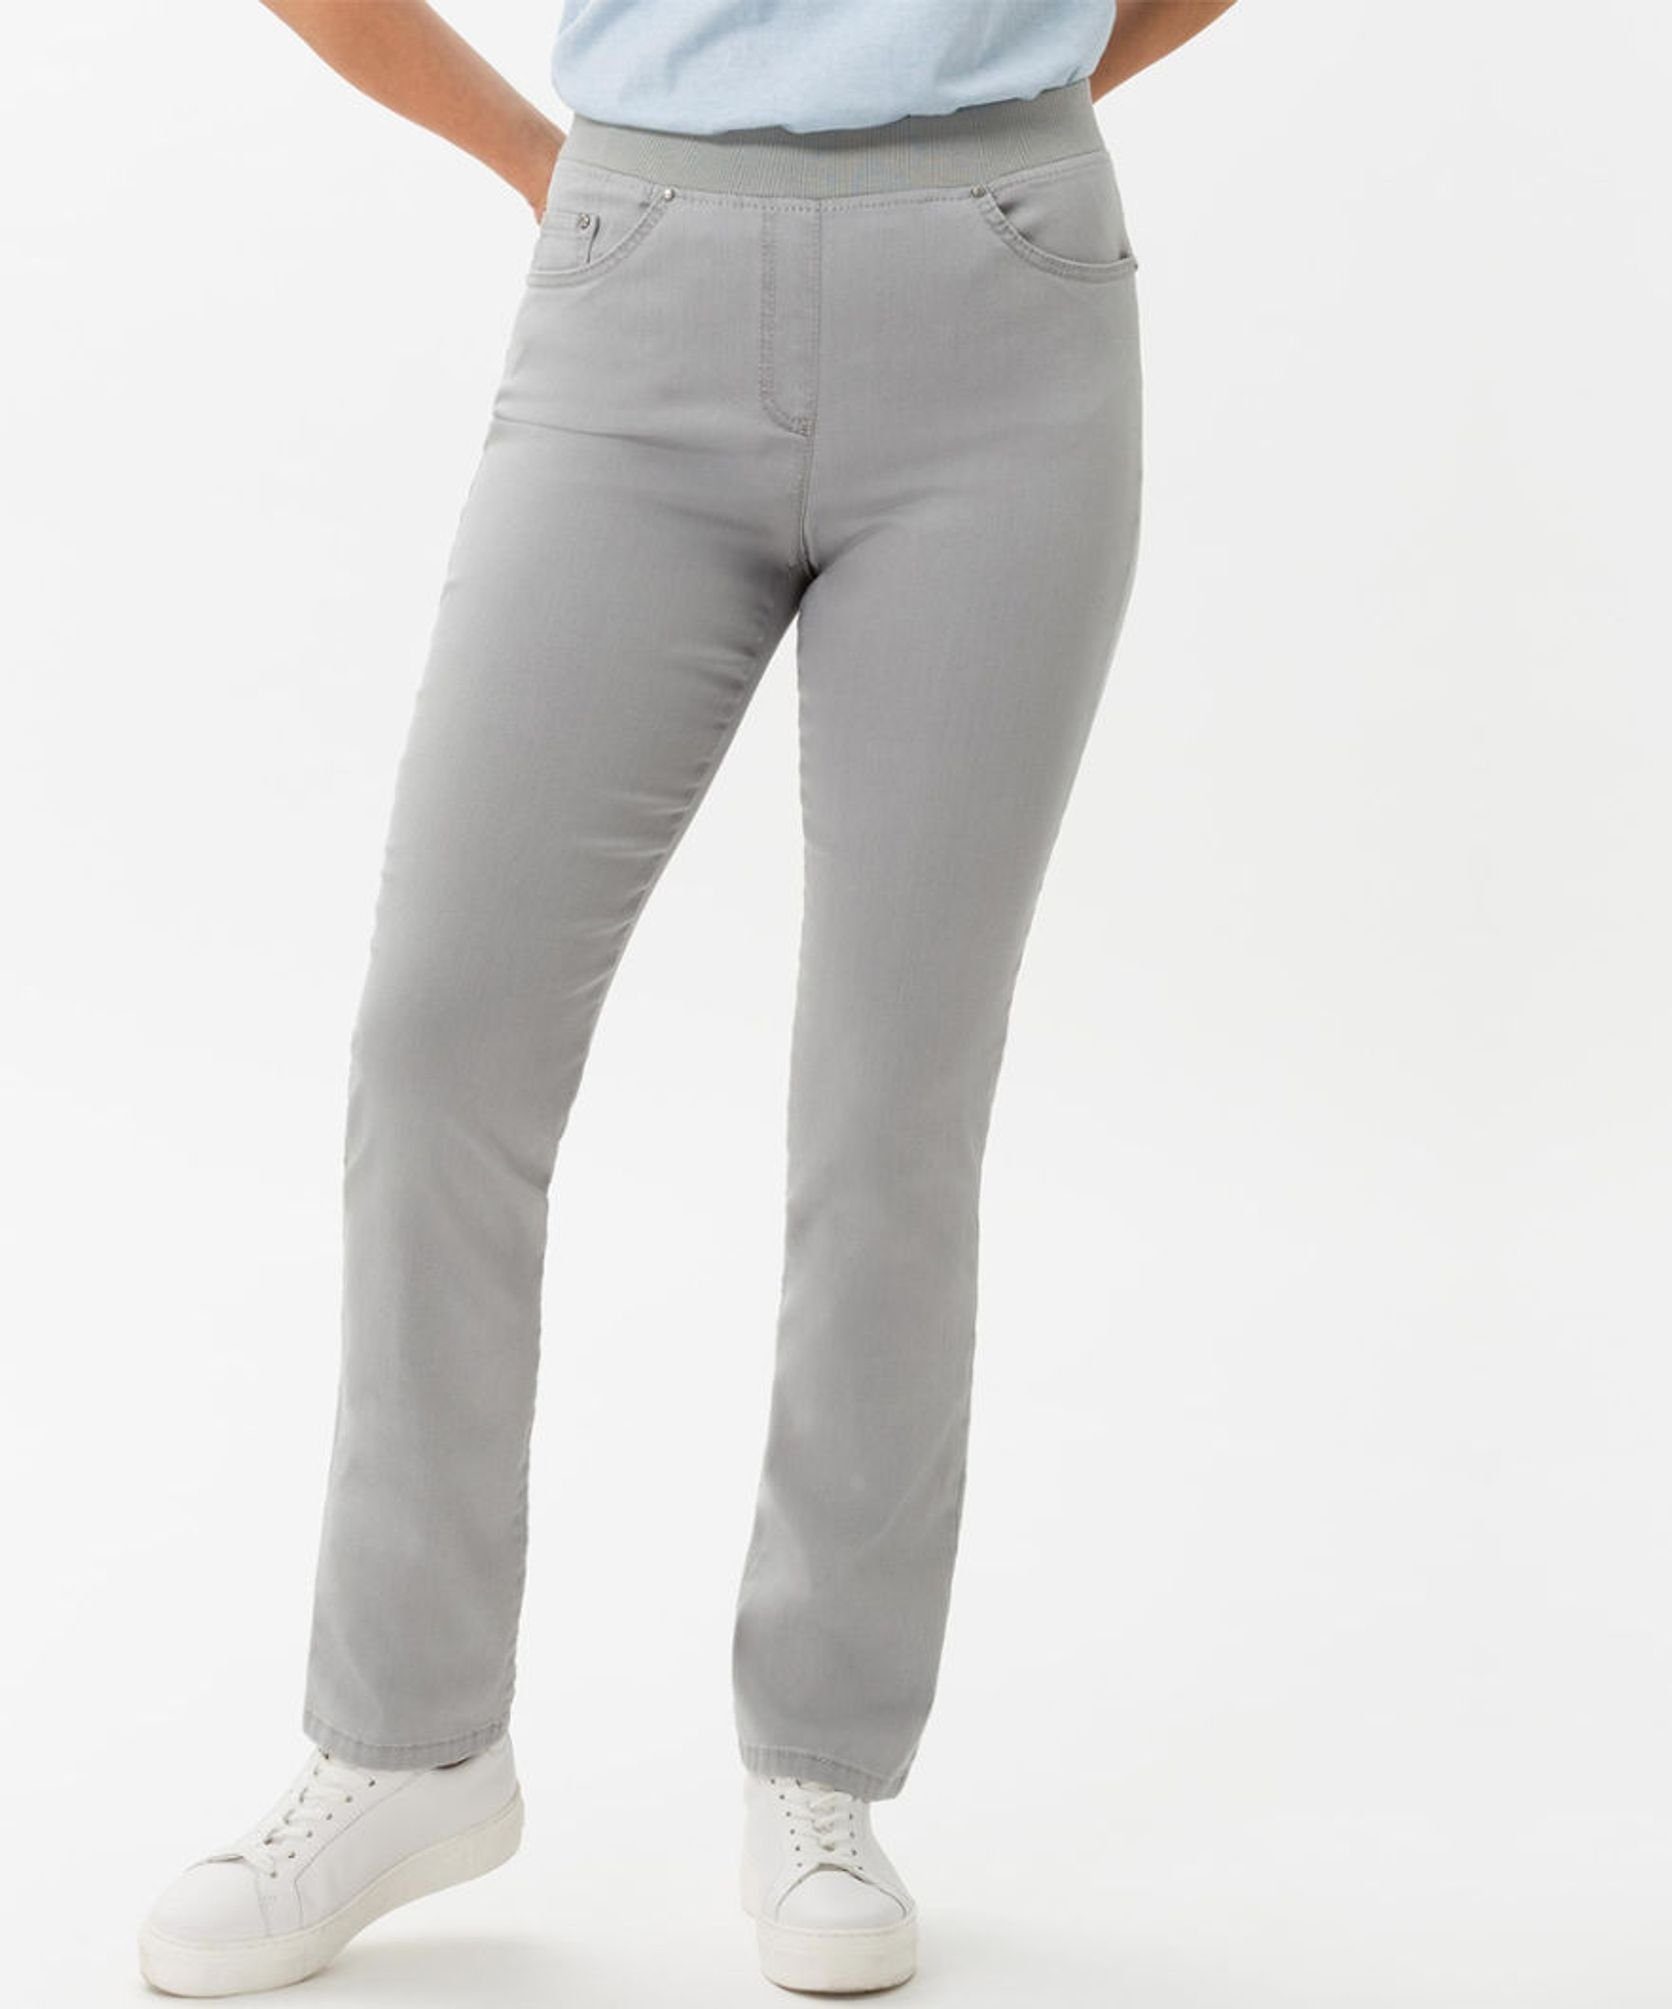 14-6227 grey light (03) by BRAX RAPHAELA 5-Pocket-Jeans